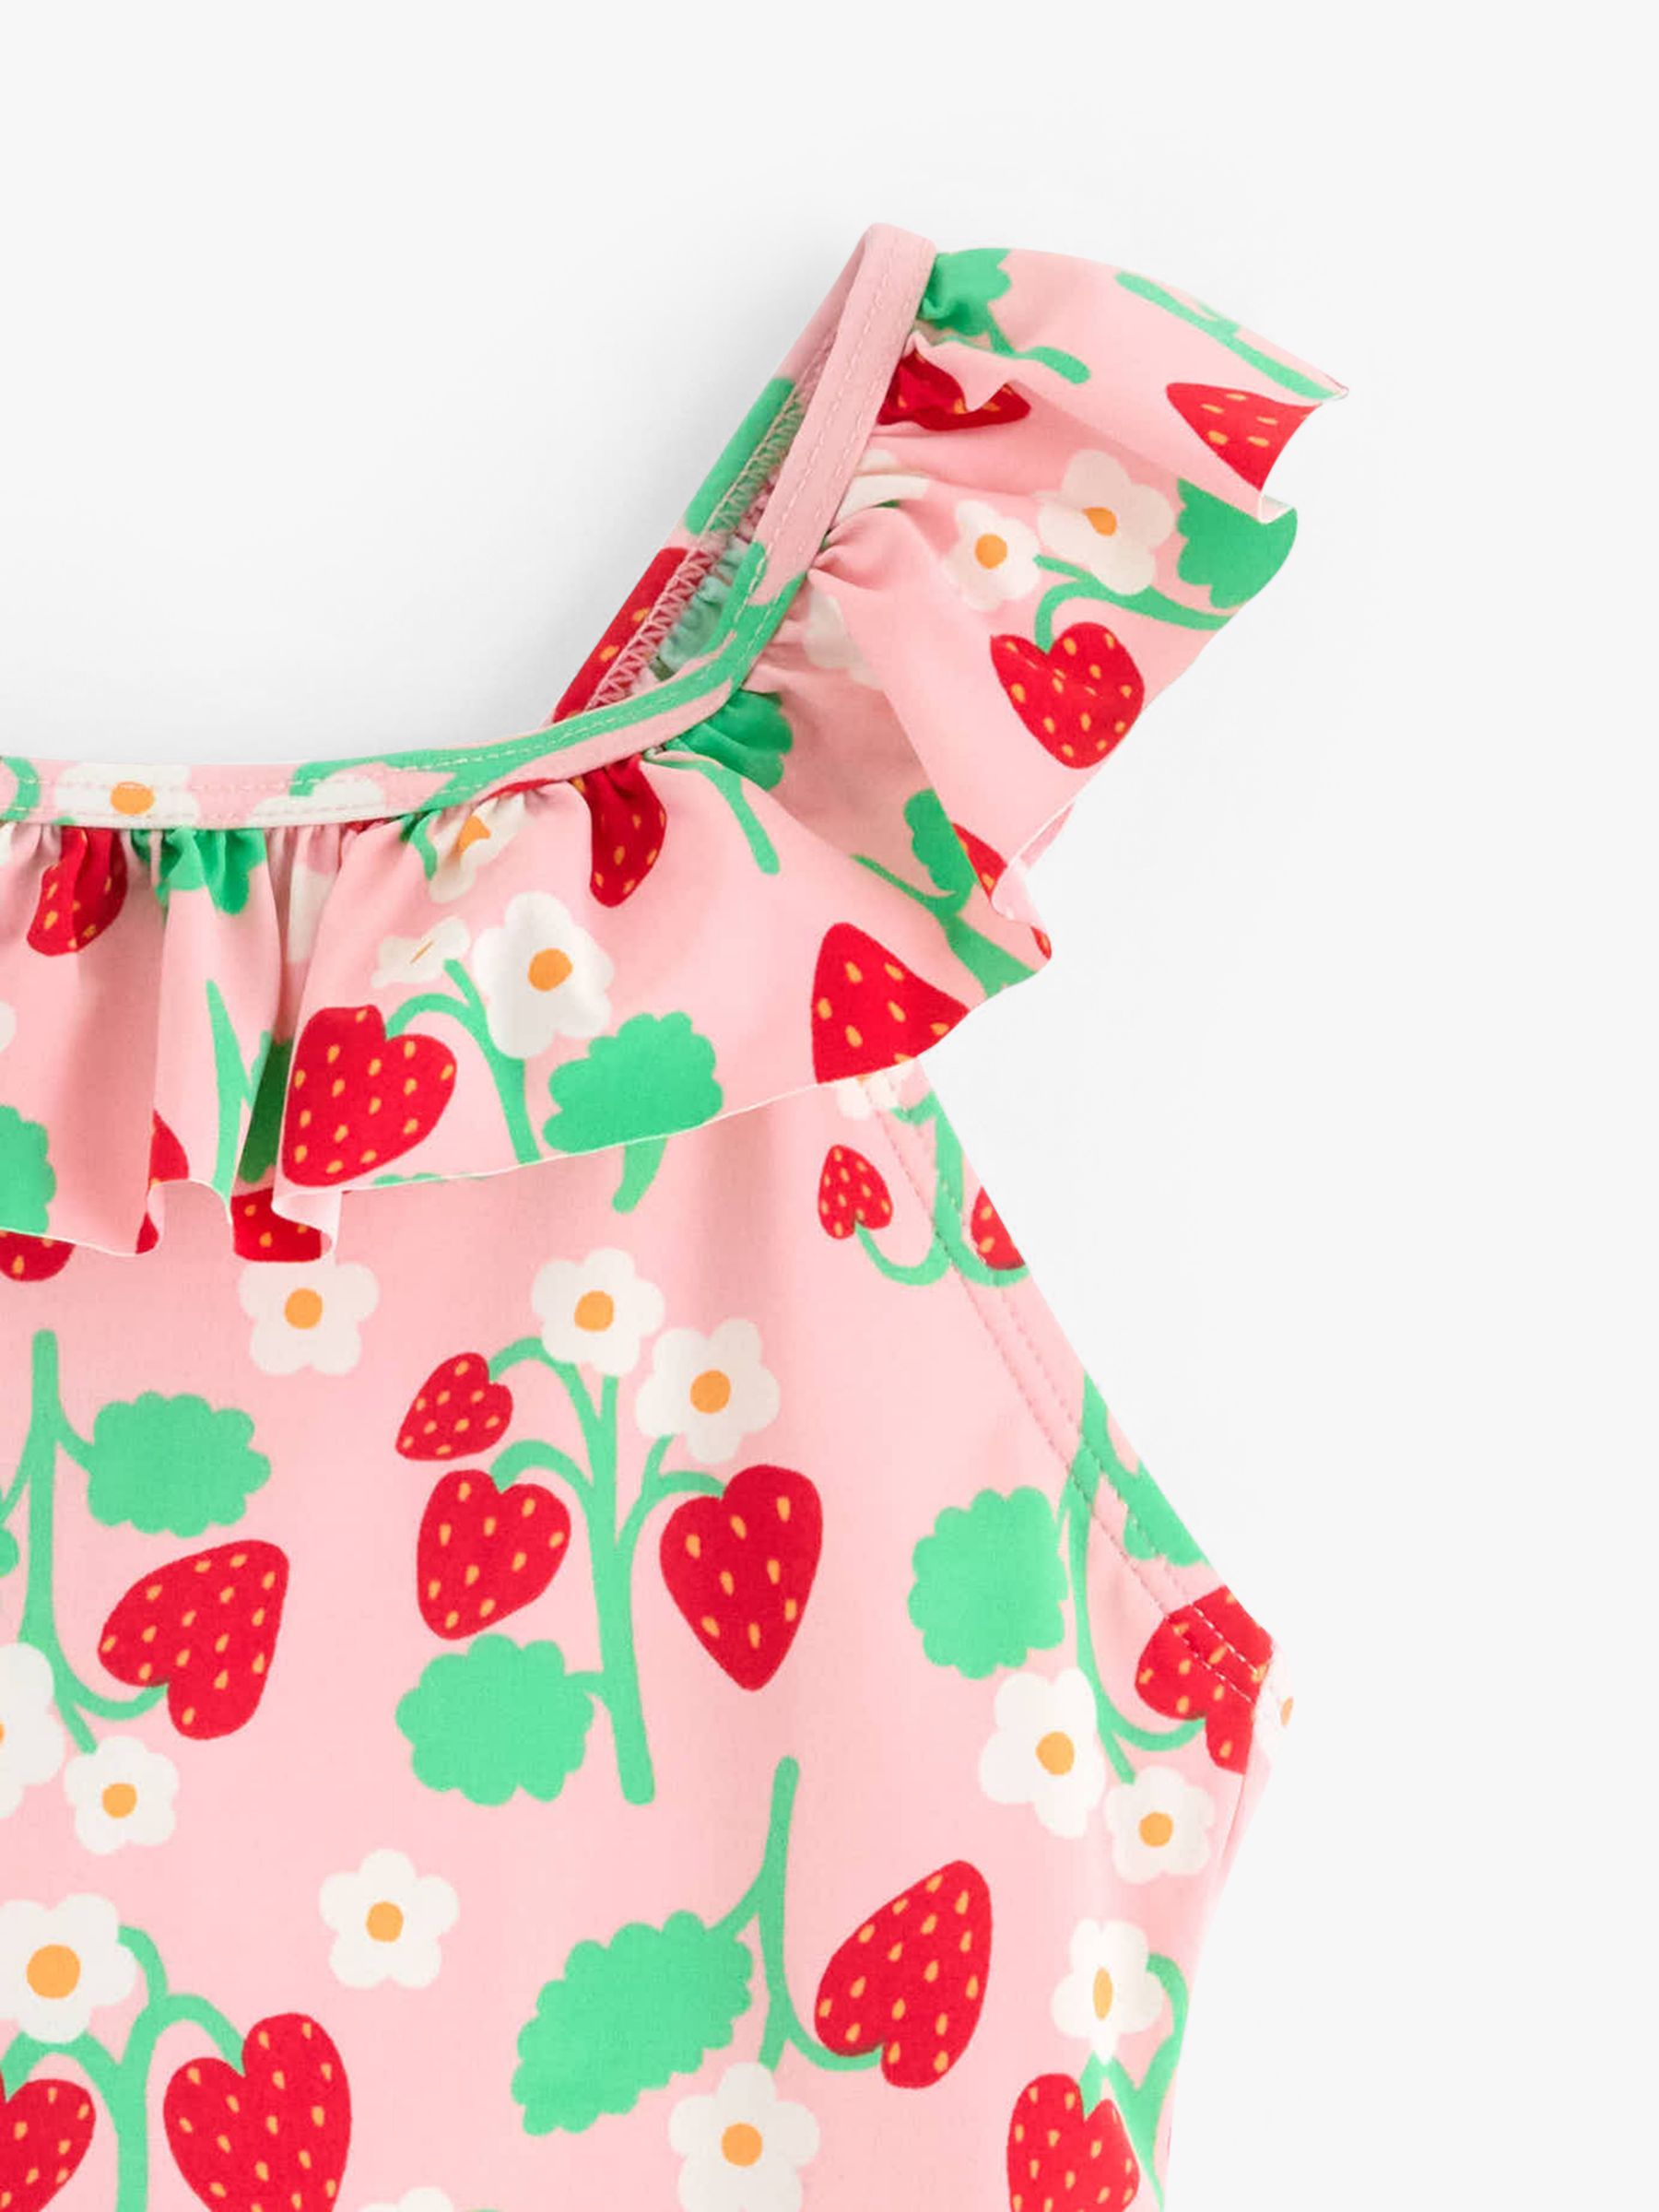 Lindex Kids' Strawberry Print Swimsuit, Light Pink/Multi, 4-6 years